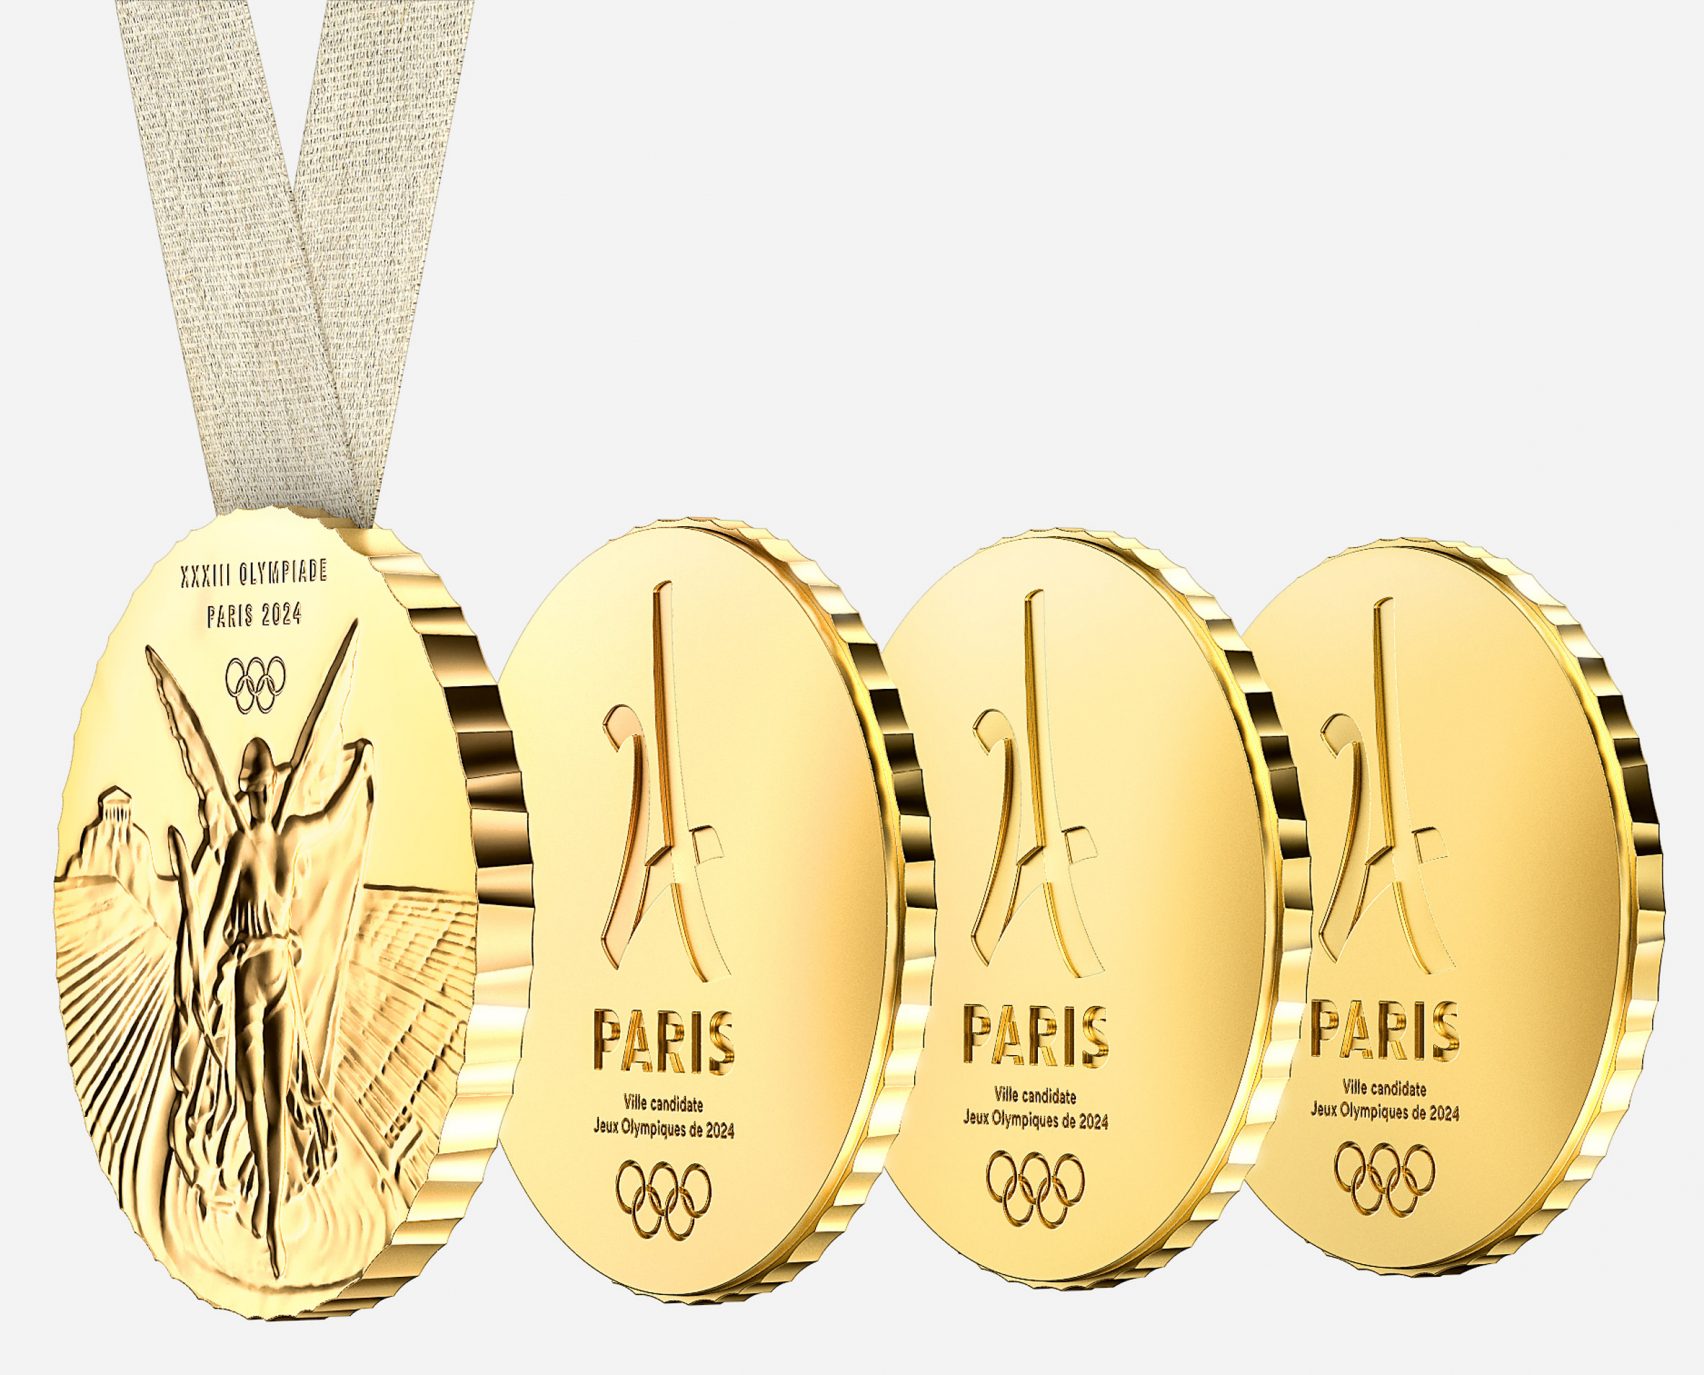 paris-2024-olympic-games-medals-philippe-starck-design_dezeen_2364_col_1-1704x1375